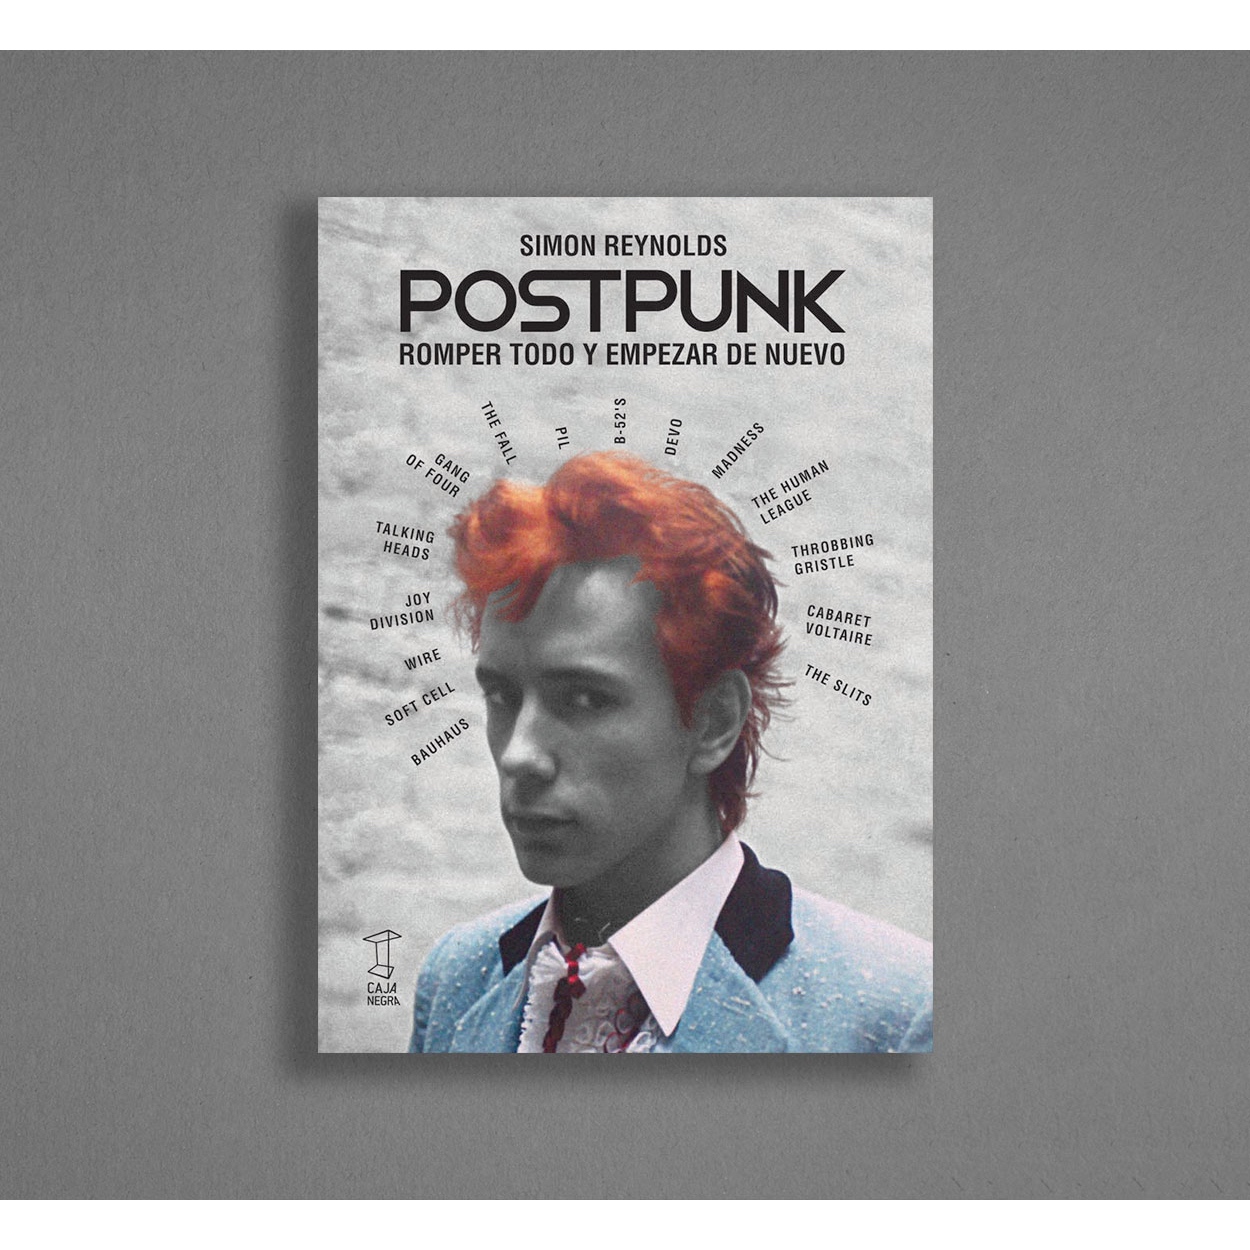 "Post punk" de Simon Reynolds